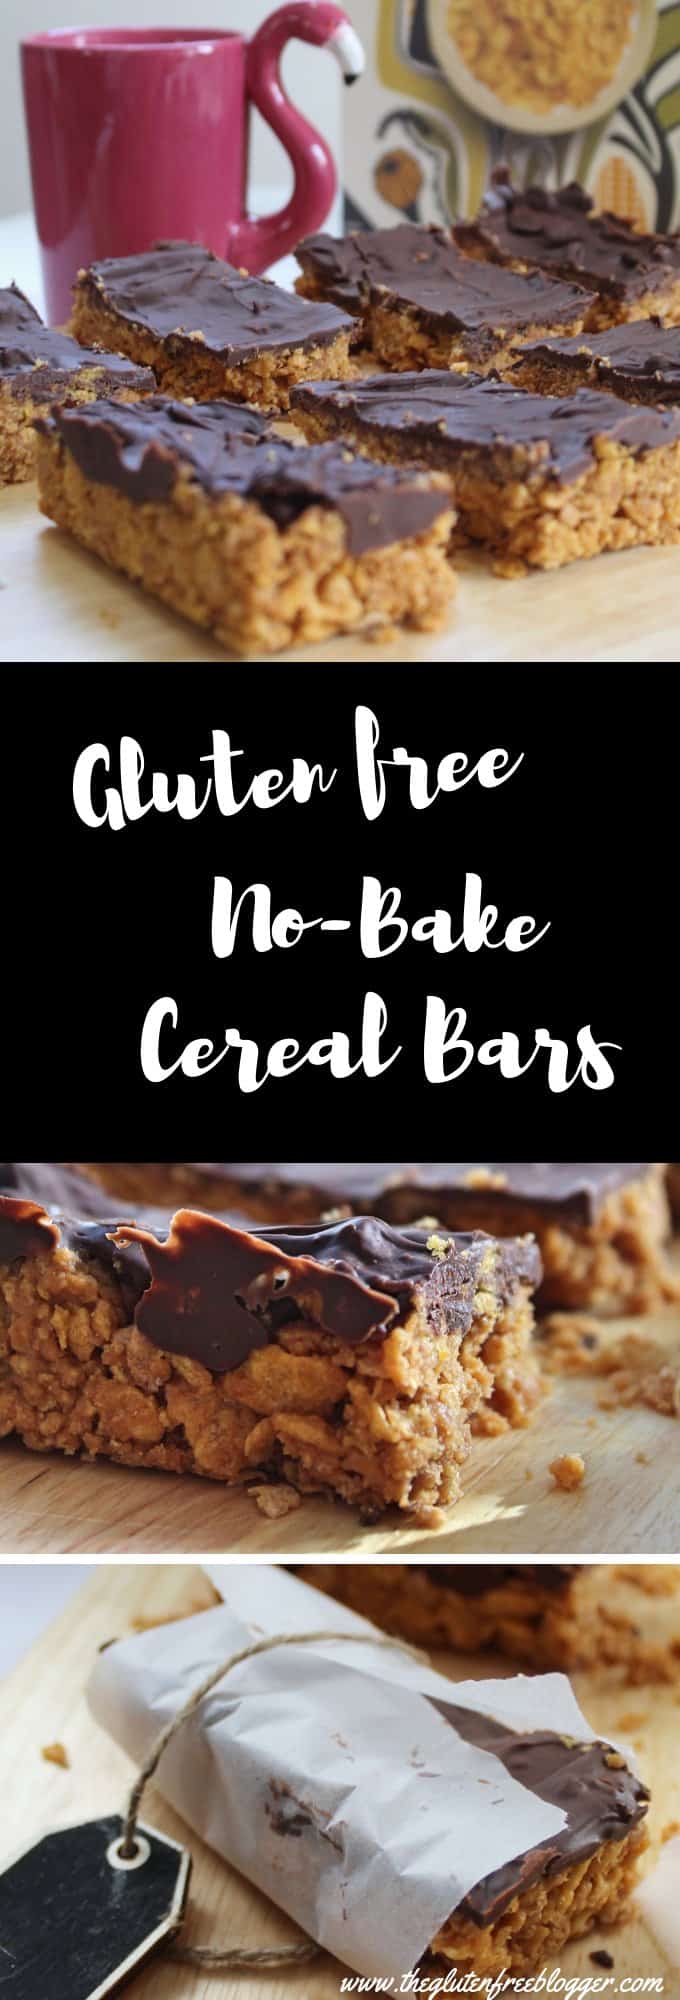 gluten free cereal bars recipe easy no bake snacks coeliac